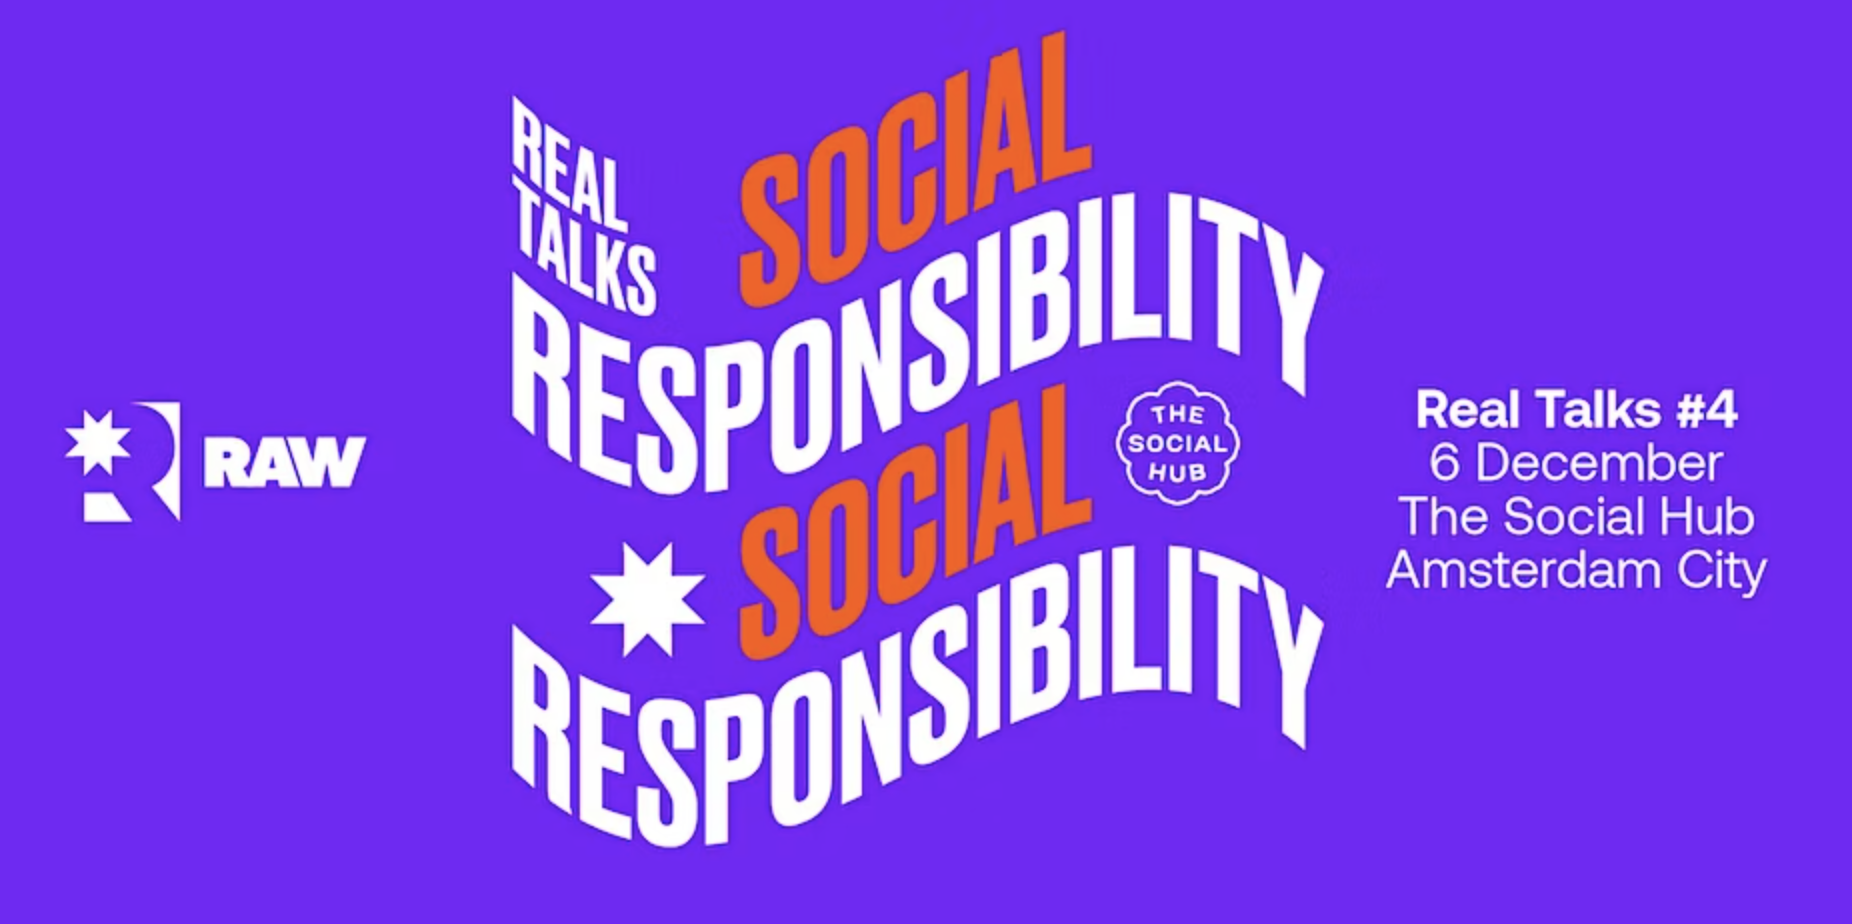 RA*W is terug met een nieuwe Real Talks: Social Responsibility